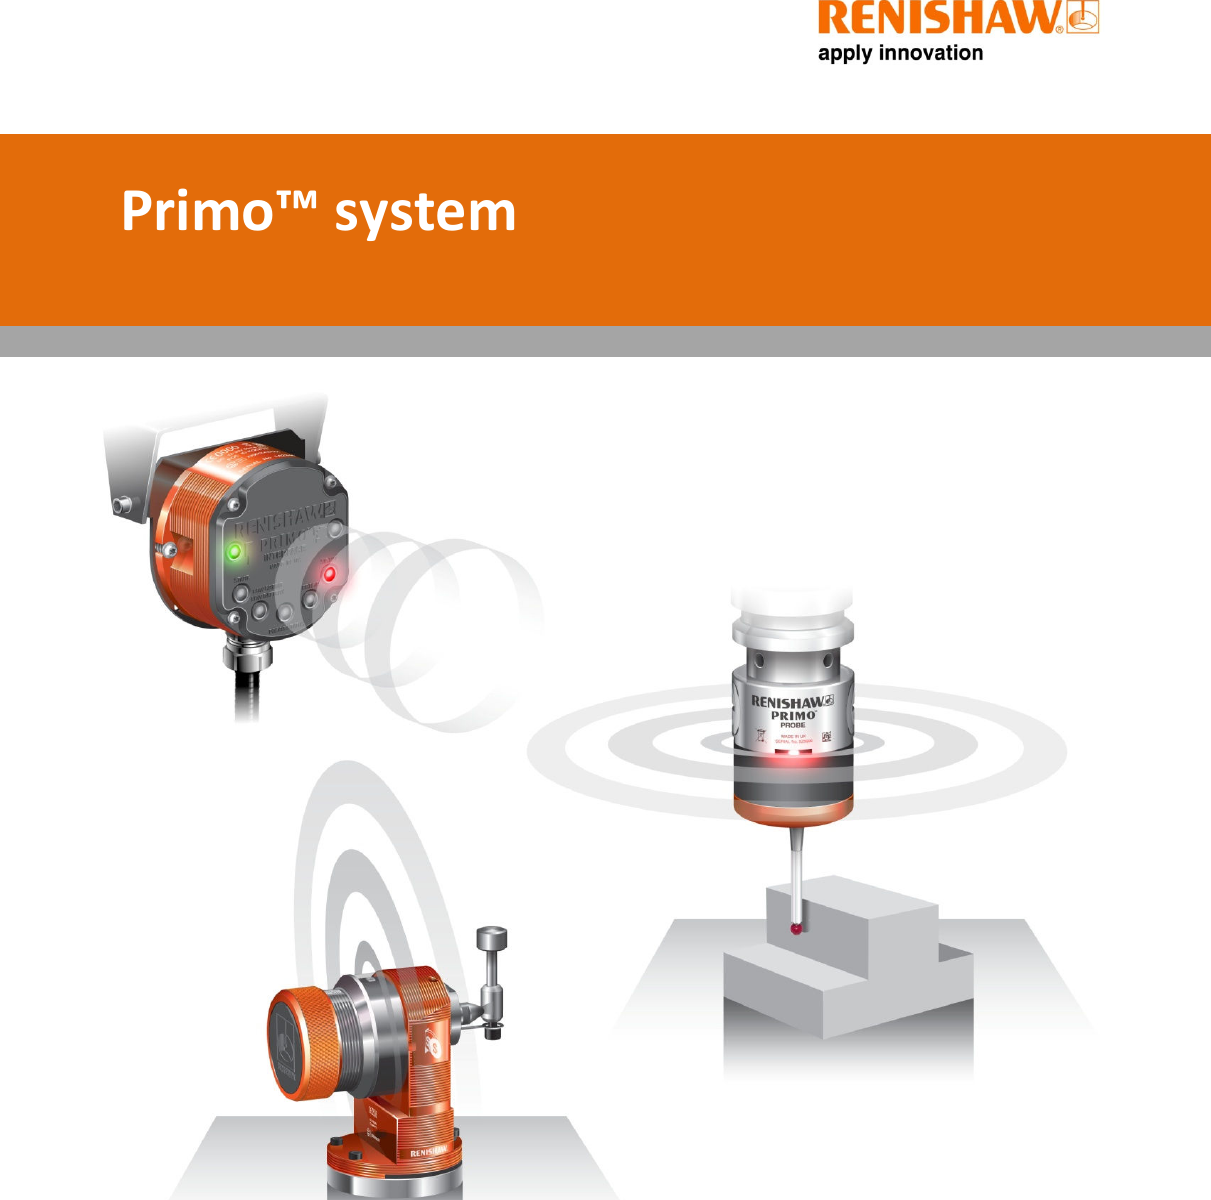                                          Primo™ system  